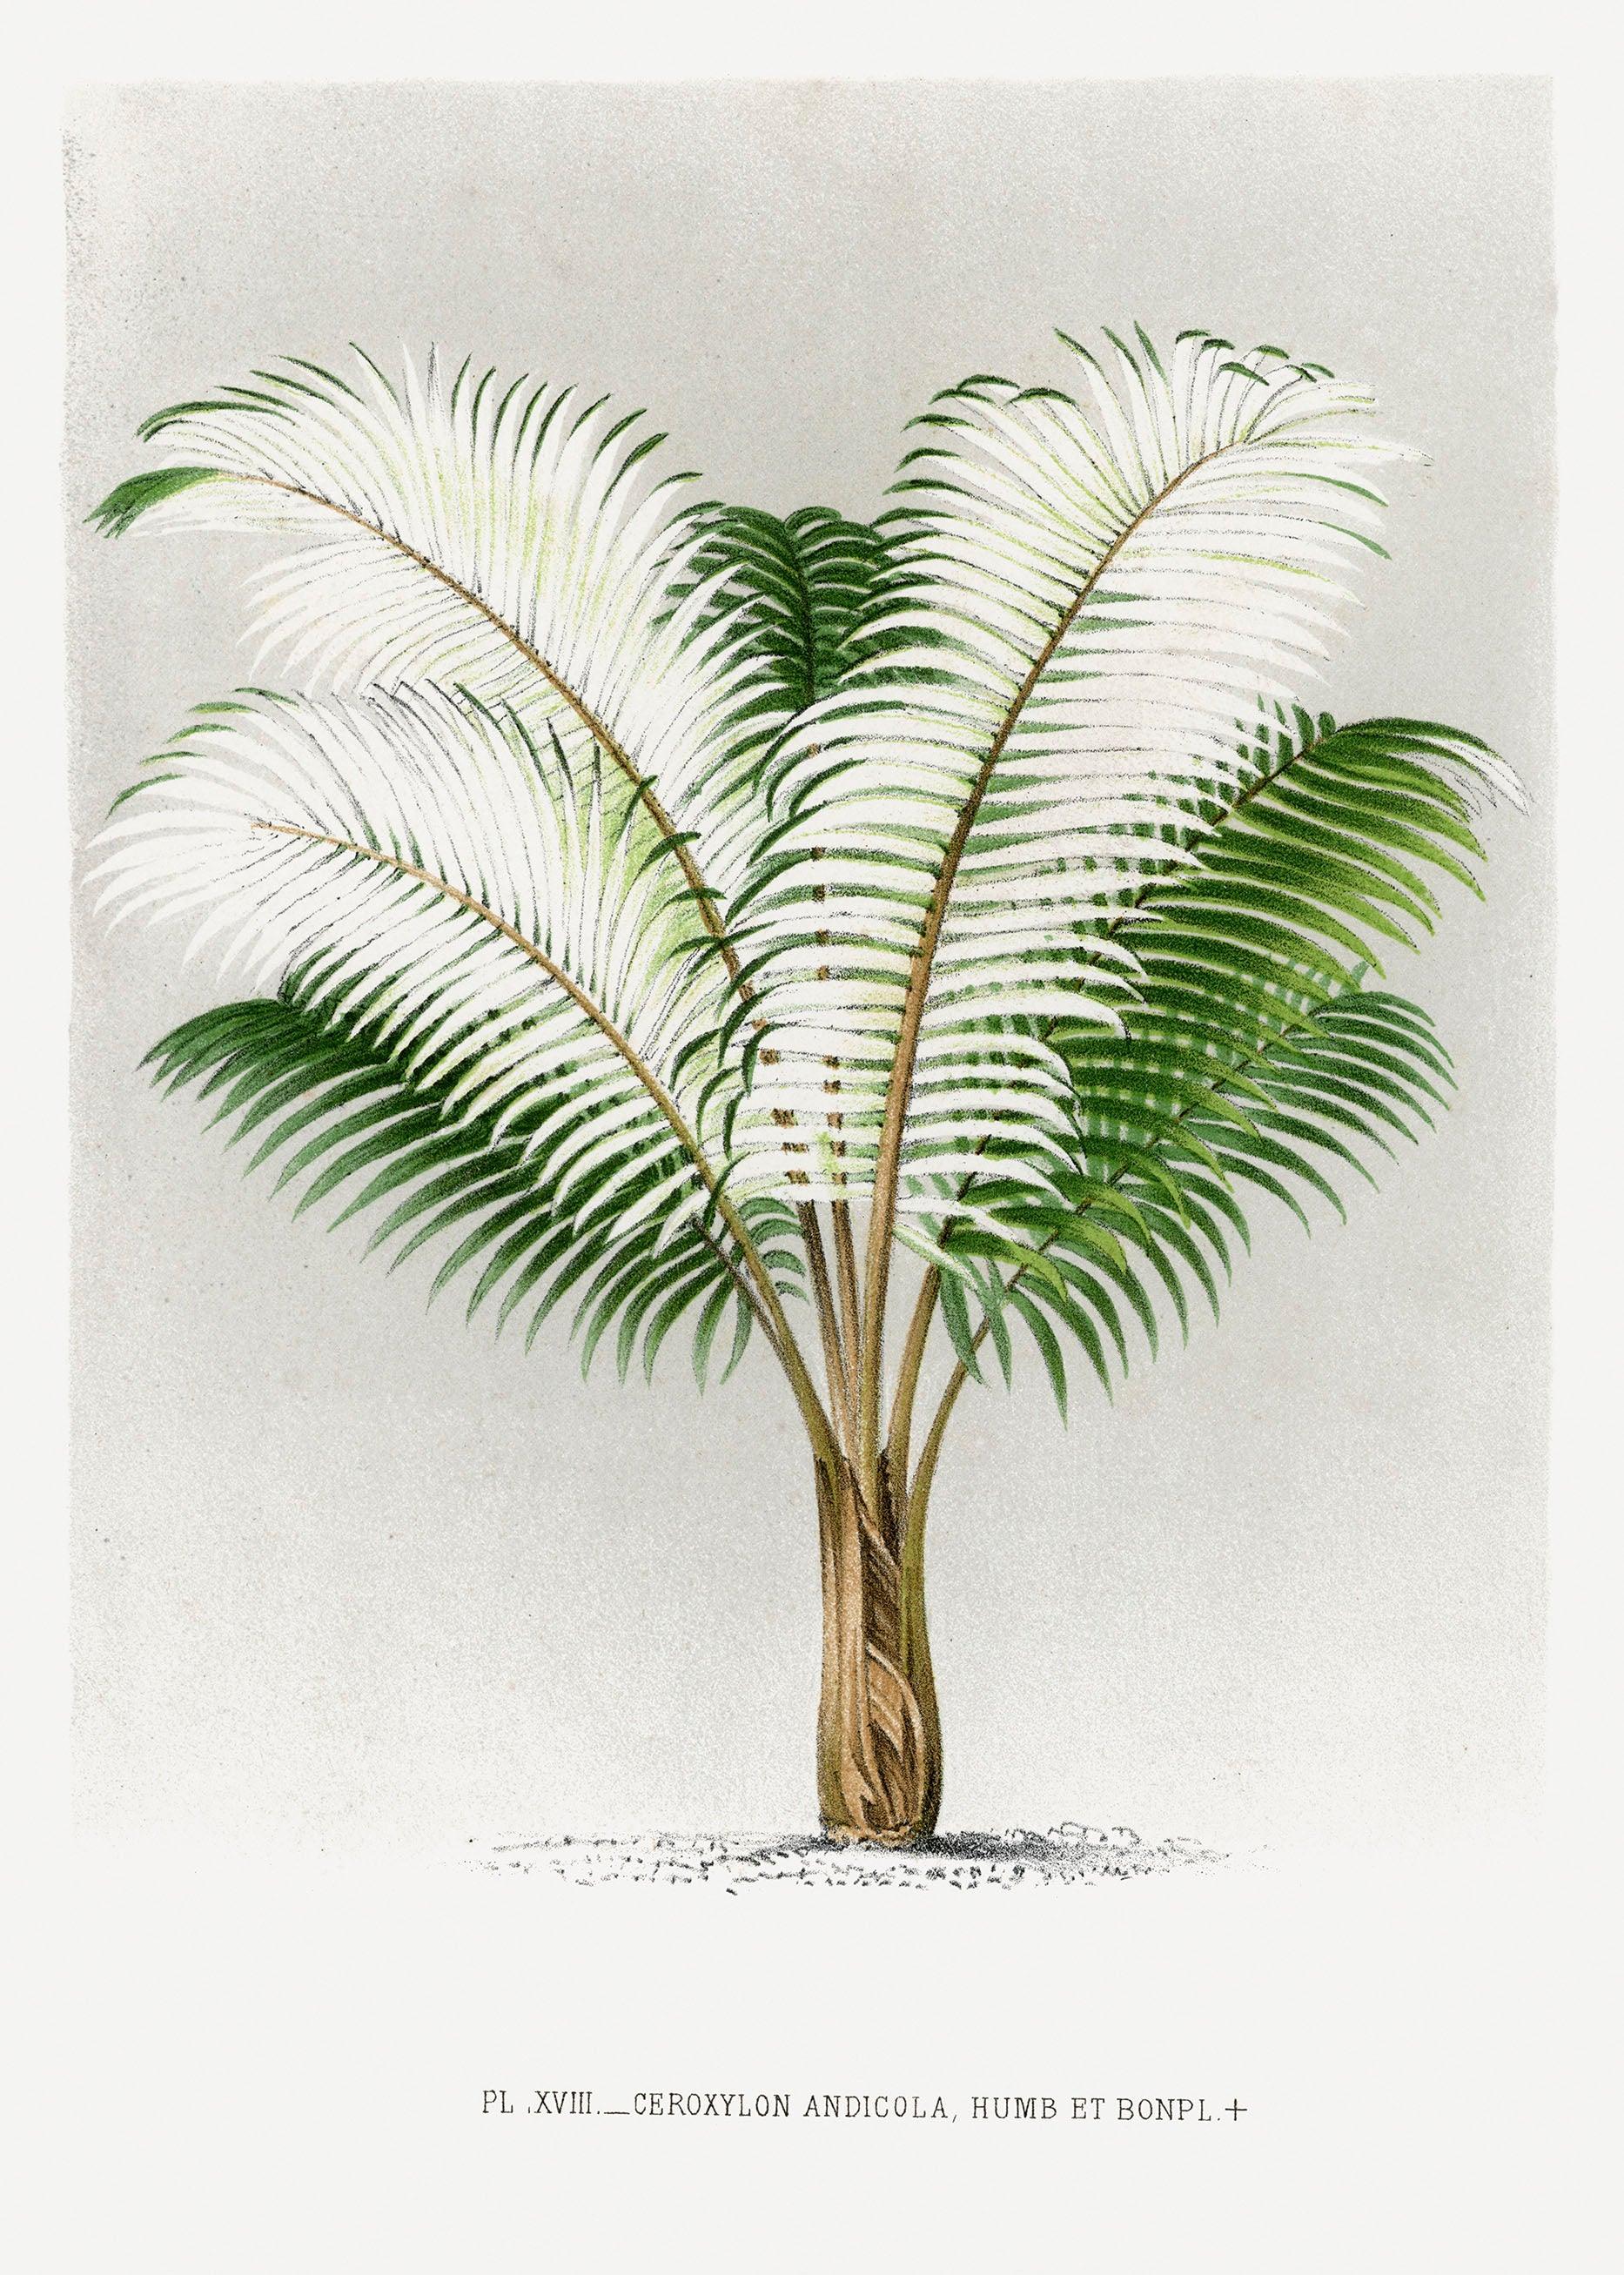 PALM TREE PRINTS: Vintage Illustrations from Les Palmiers Histoire Iconographique - Pimlico Prints